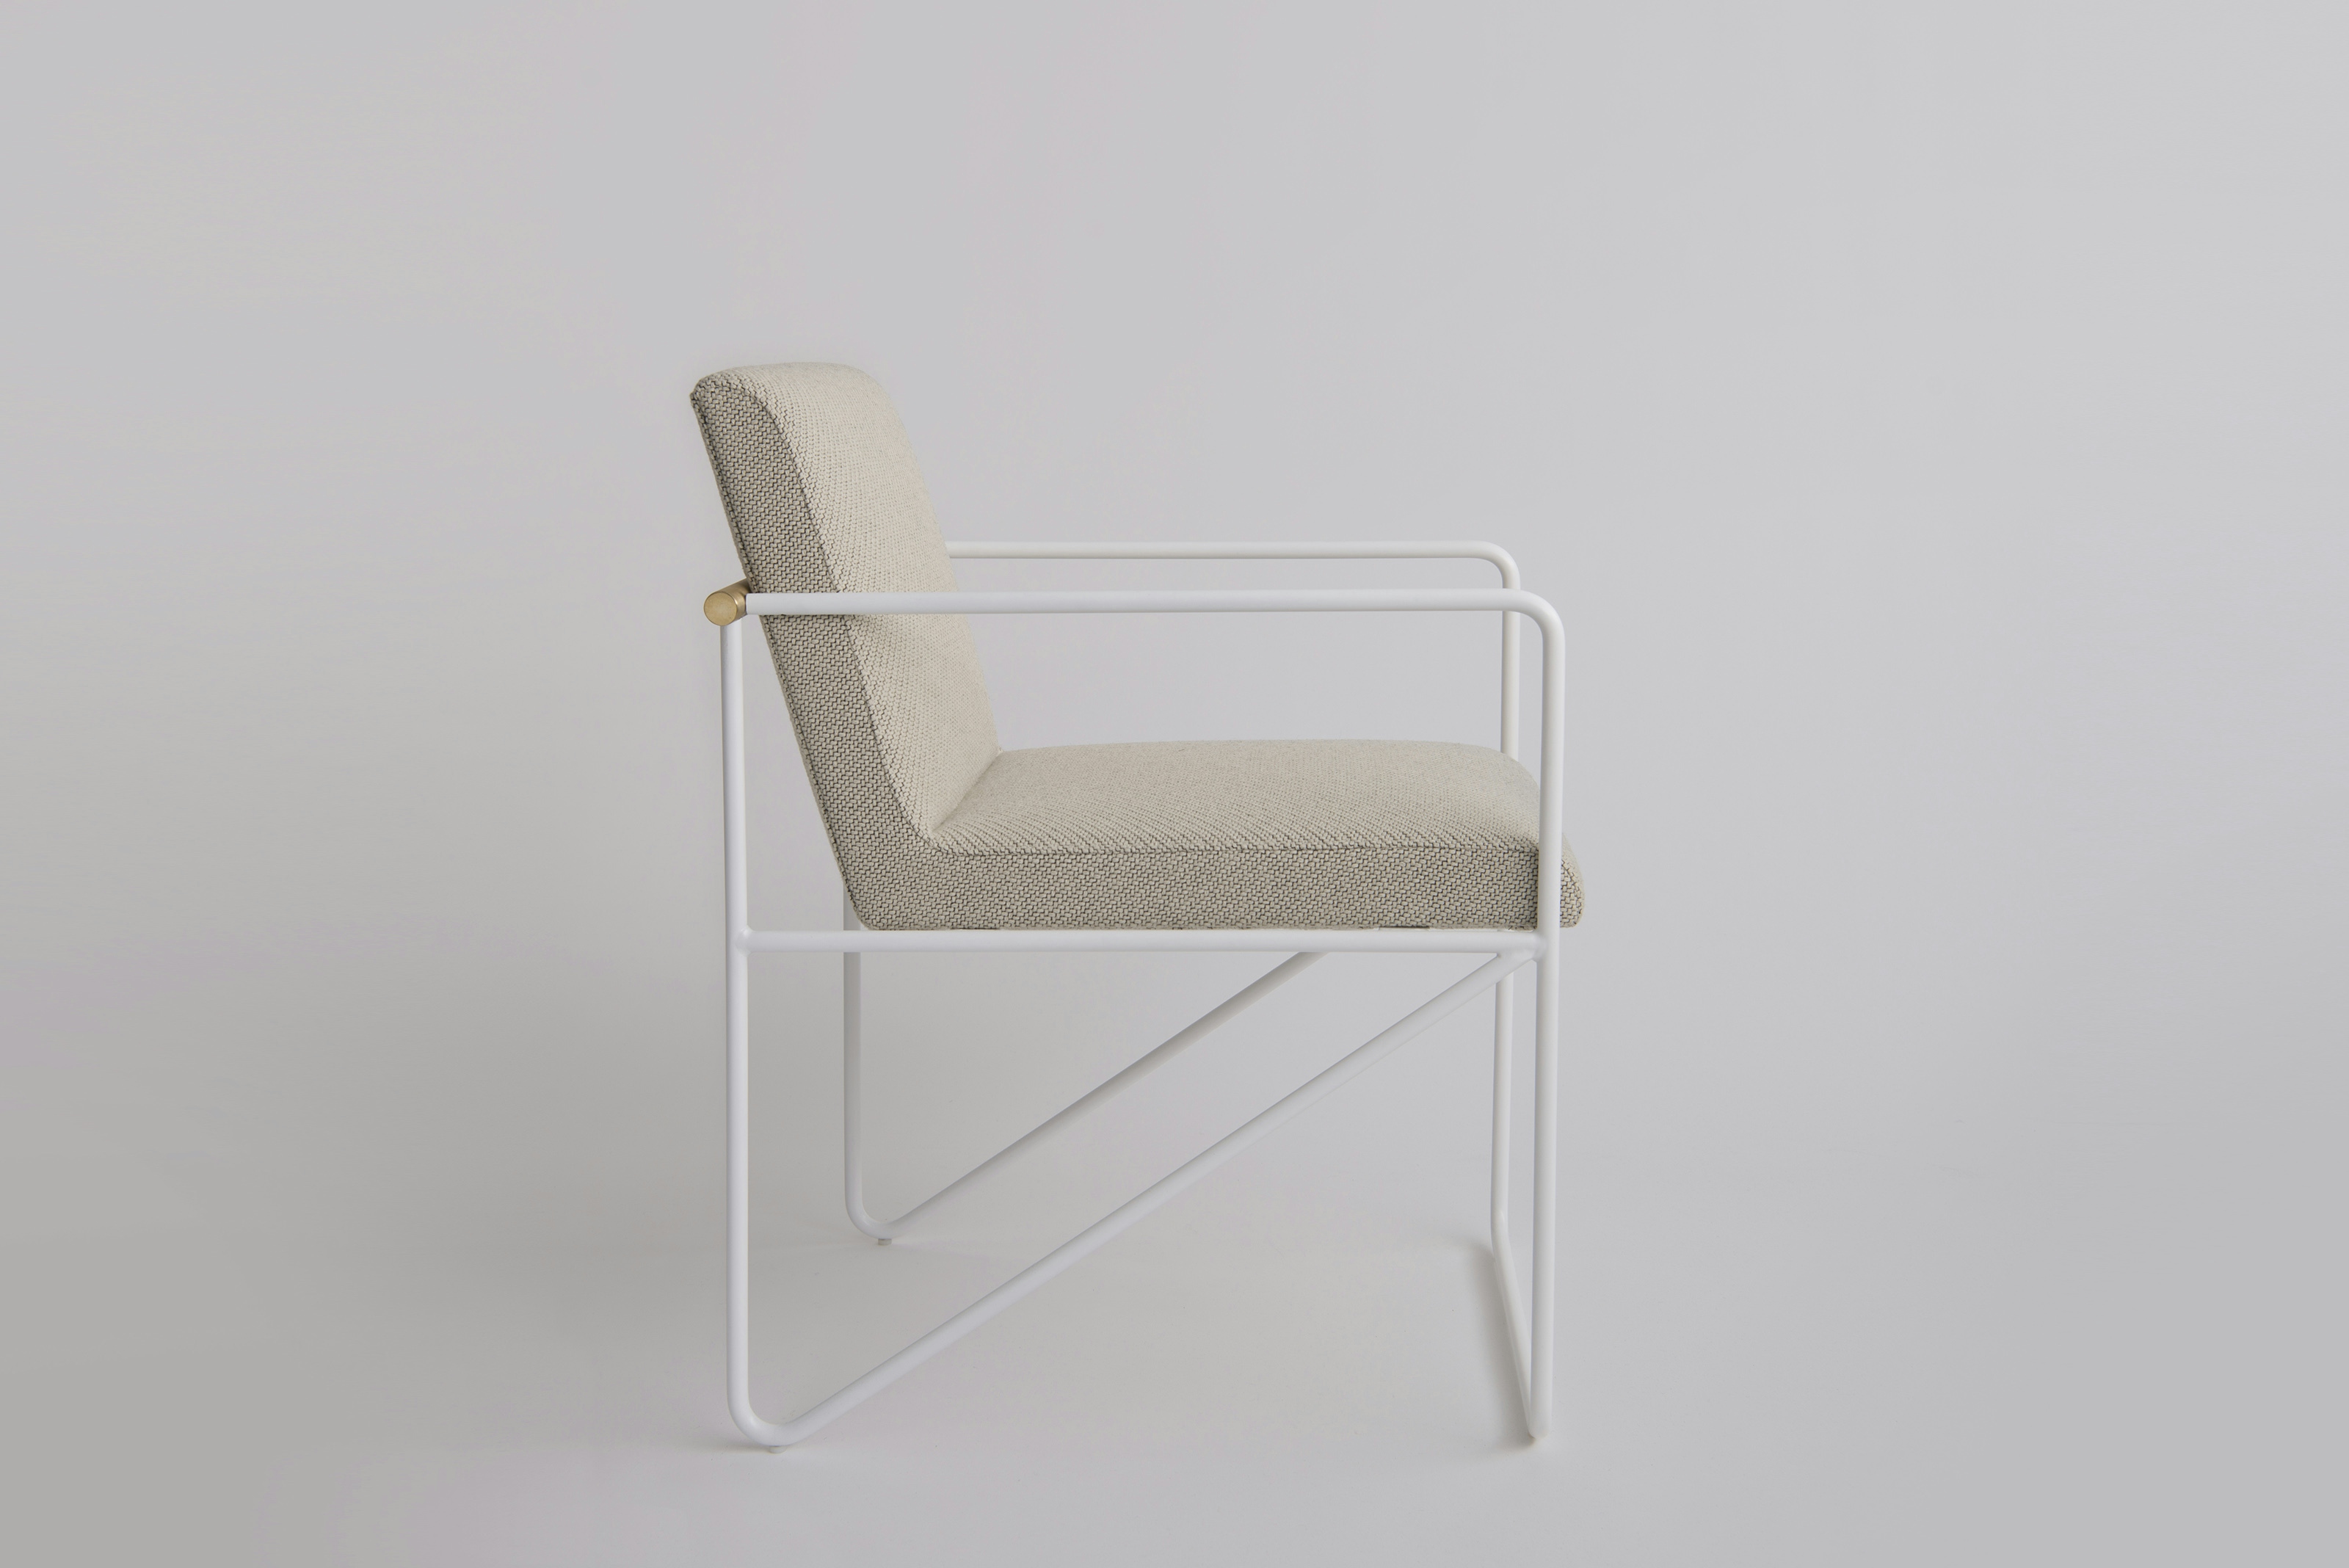 Phase Design Reza Feiz Kickstand Side Chair 3 Web